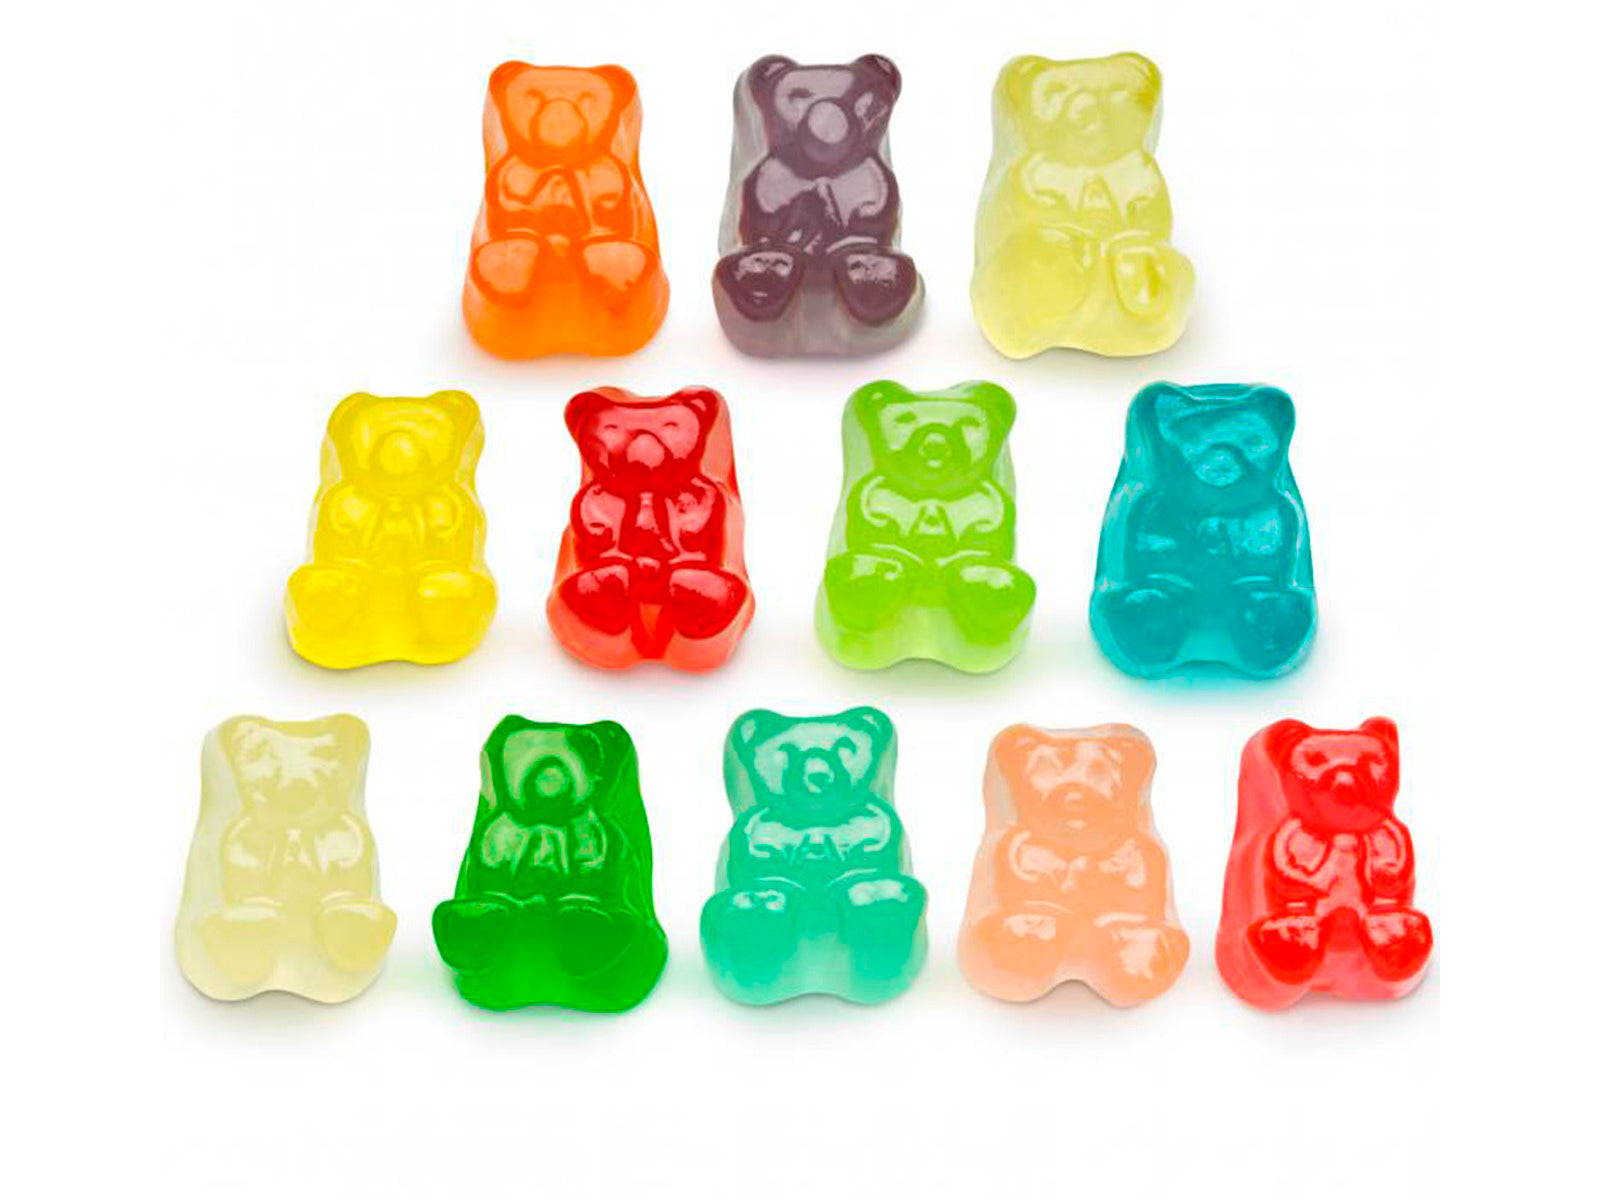 Gummi Bears - Olympia Candy Kitchen